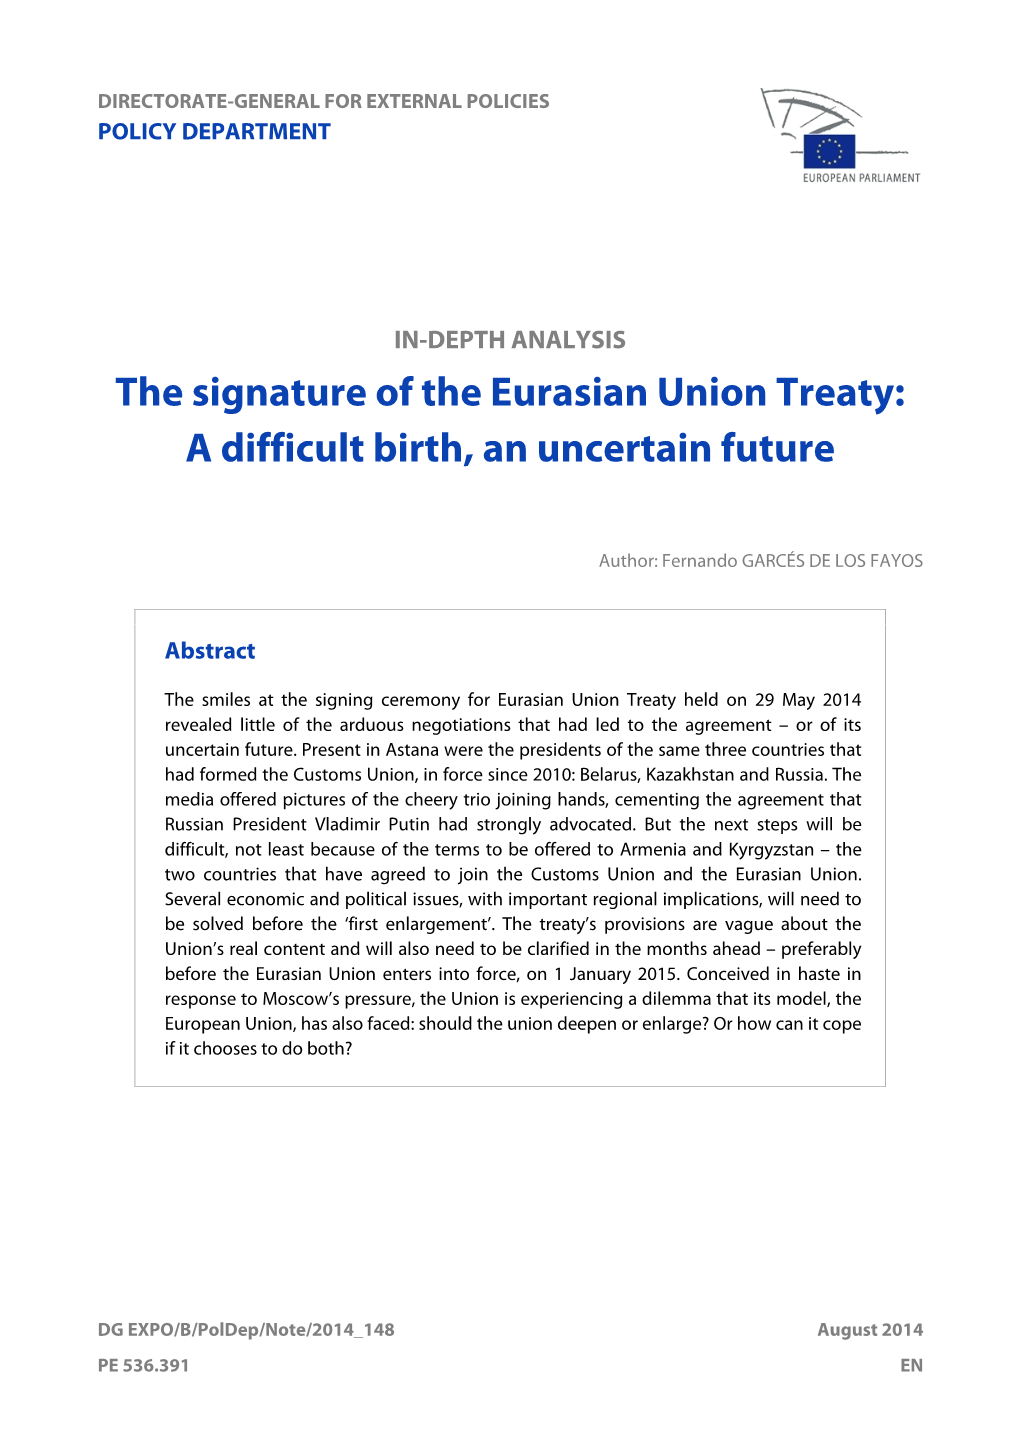 The Signature of the Eurasian Union Treaty: a Difficult Birth, an Uncertain Future